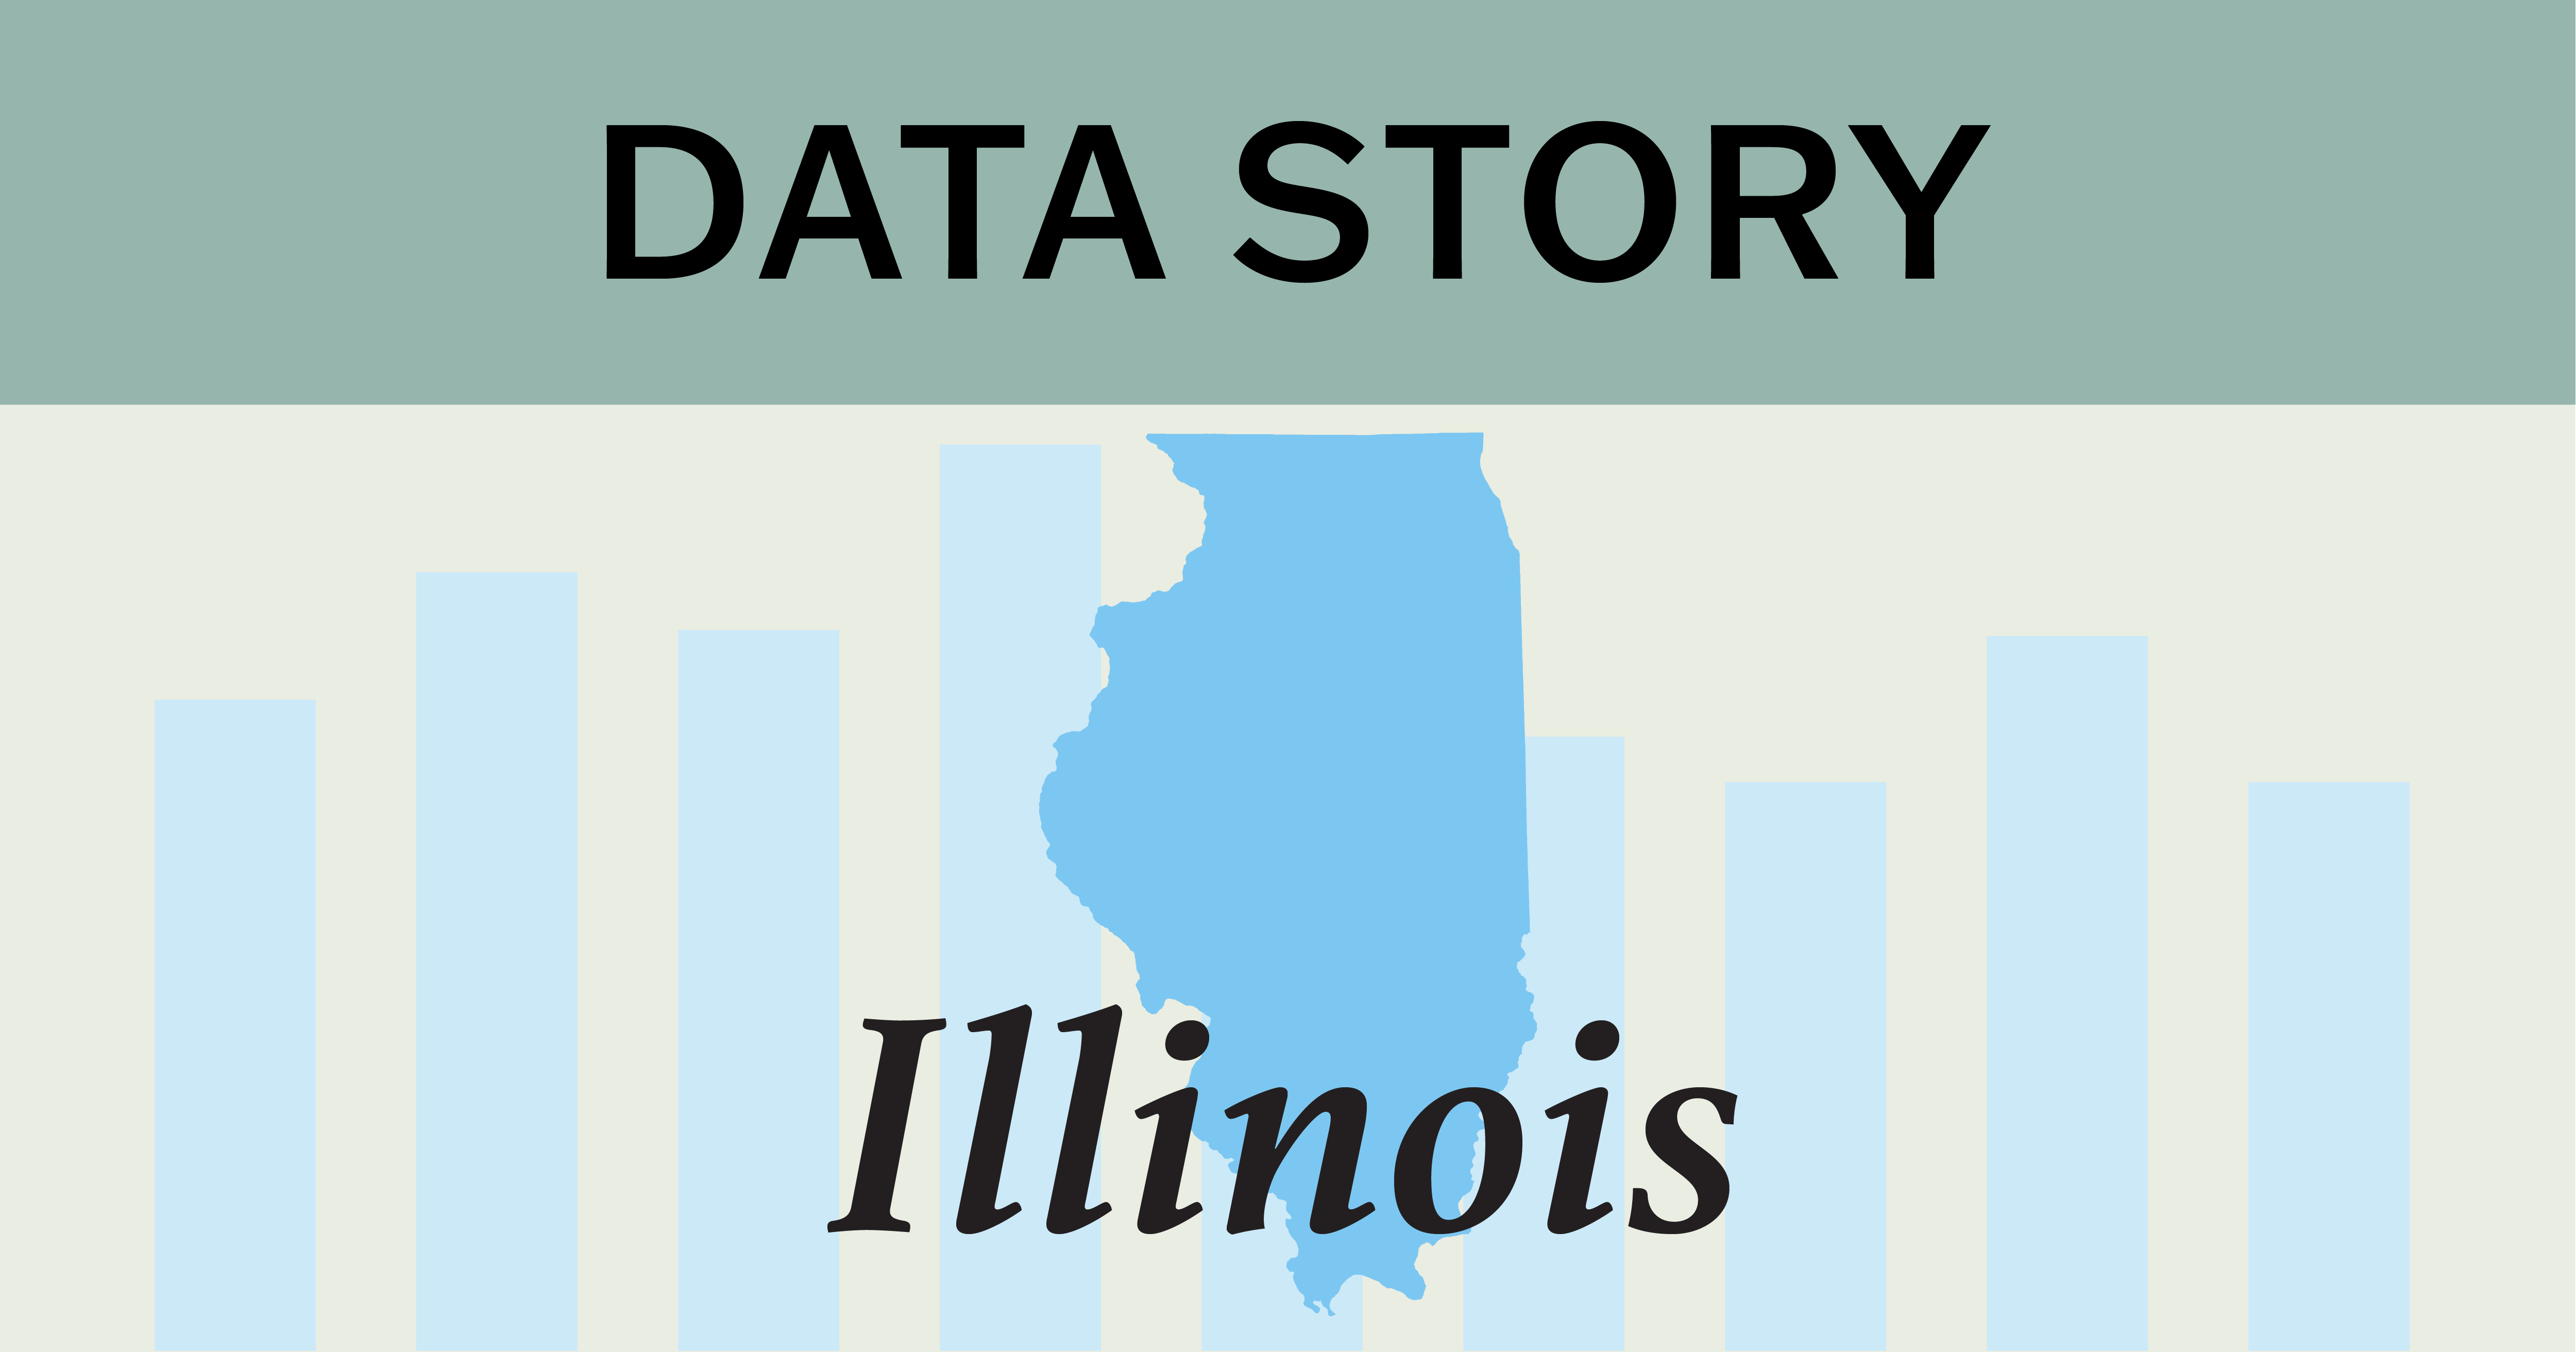 Data Story